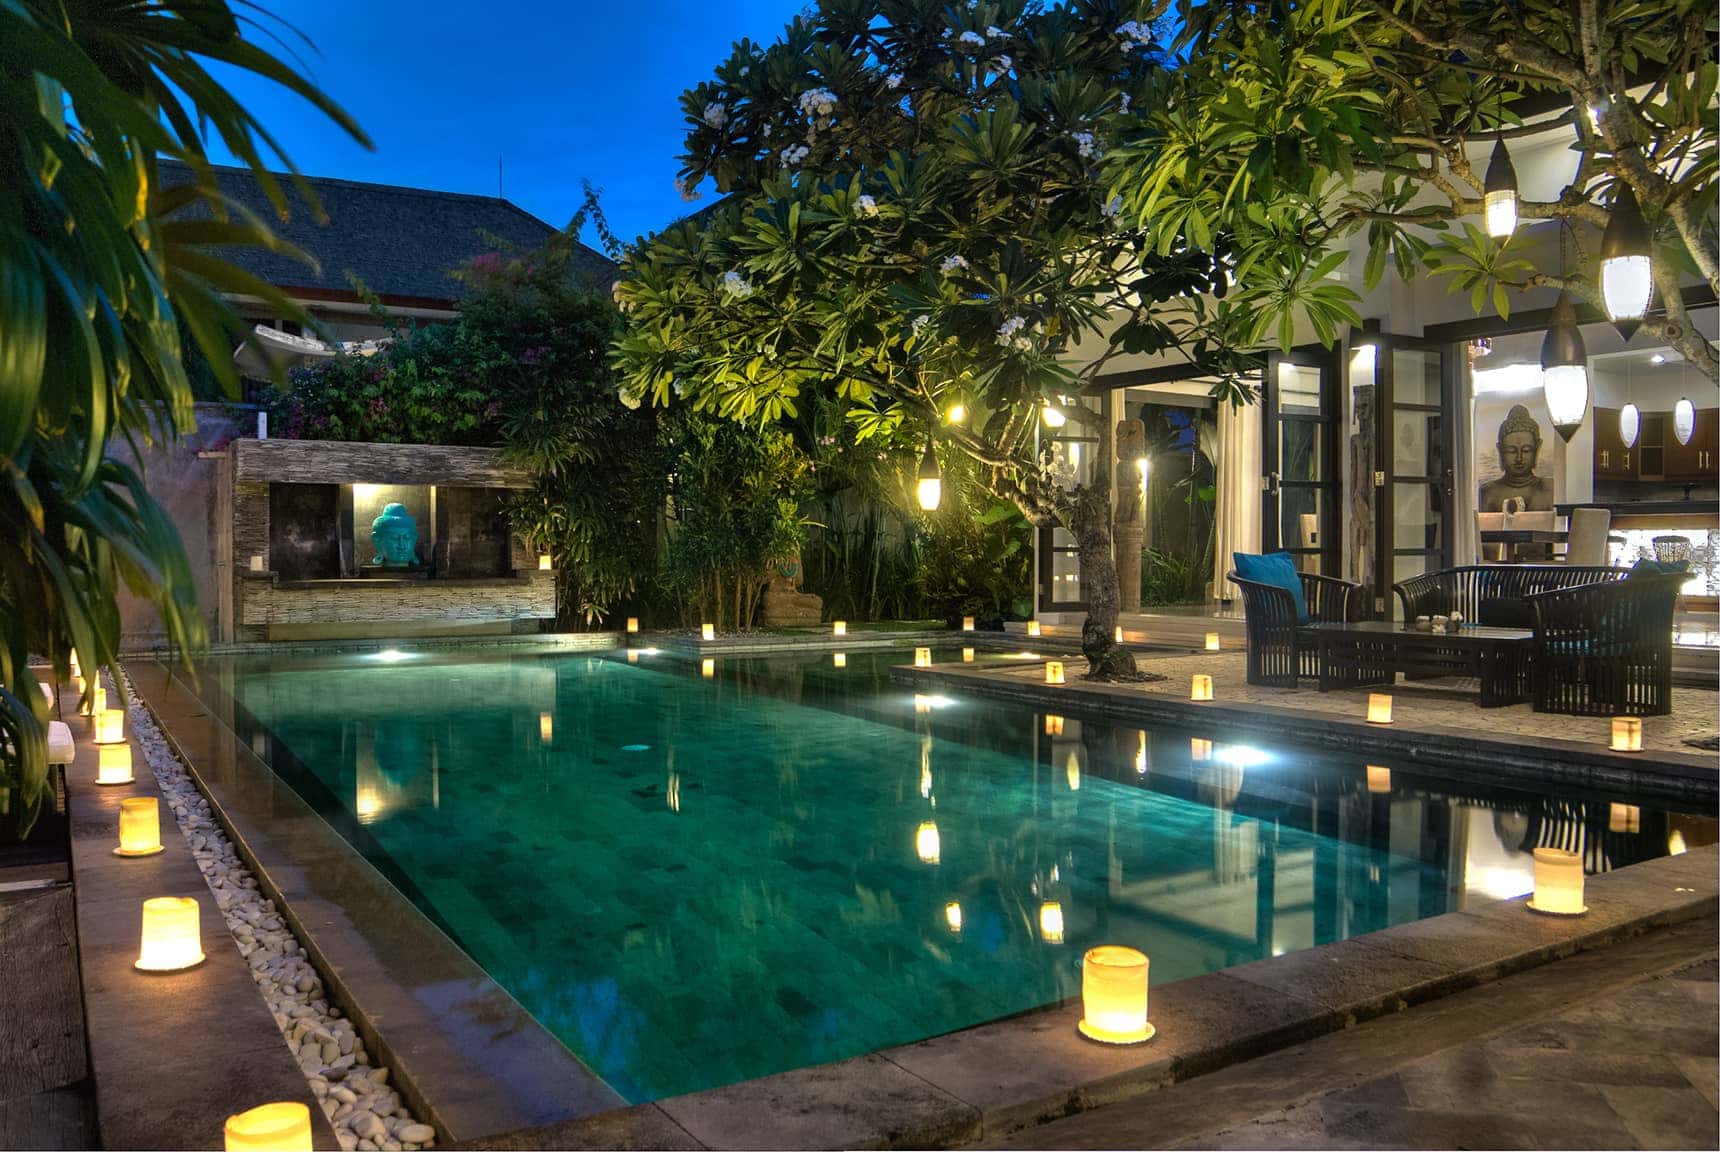 Villa Residence Seminyak - Seminyak, Bali Indonesia (Bali villa photography by master photographer Rick Carmichael of LuxViz)